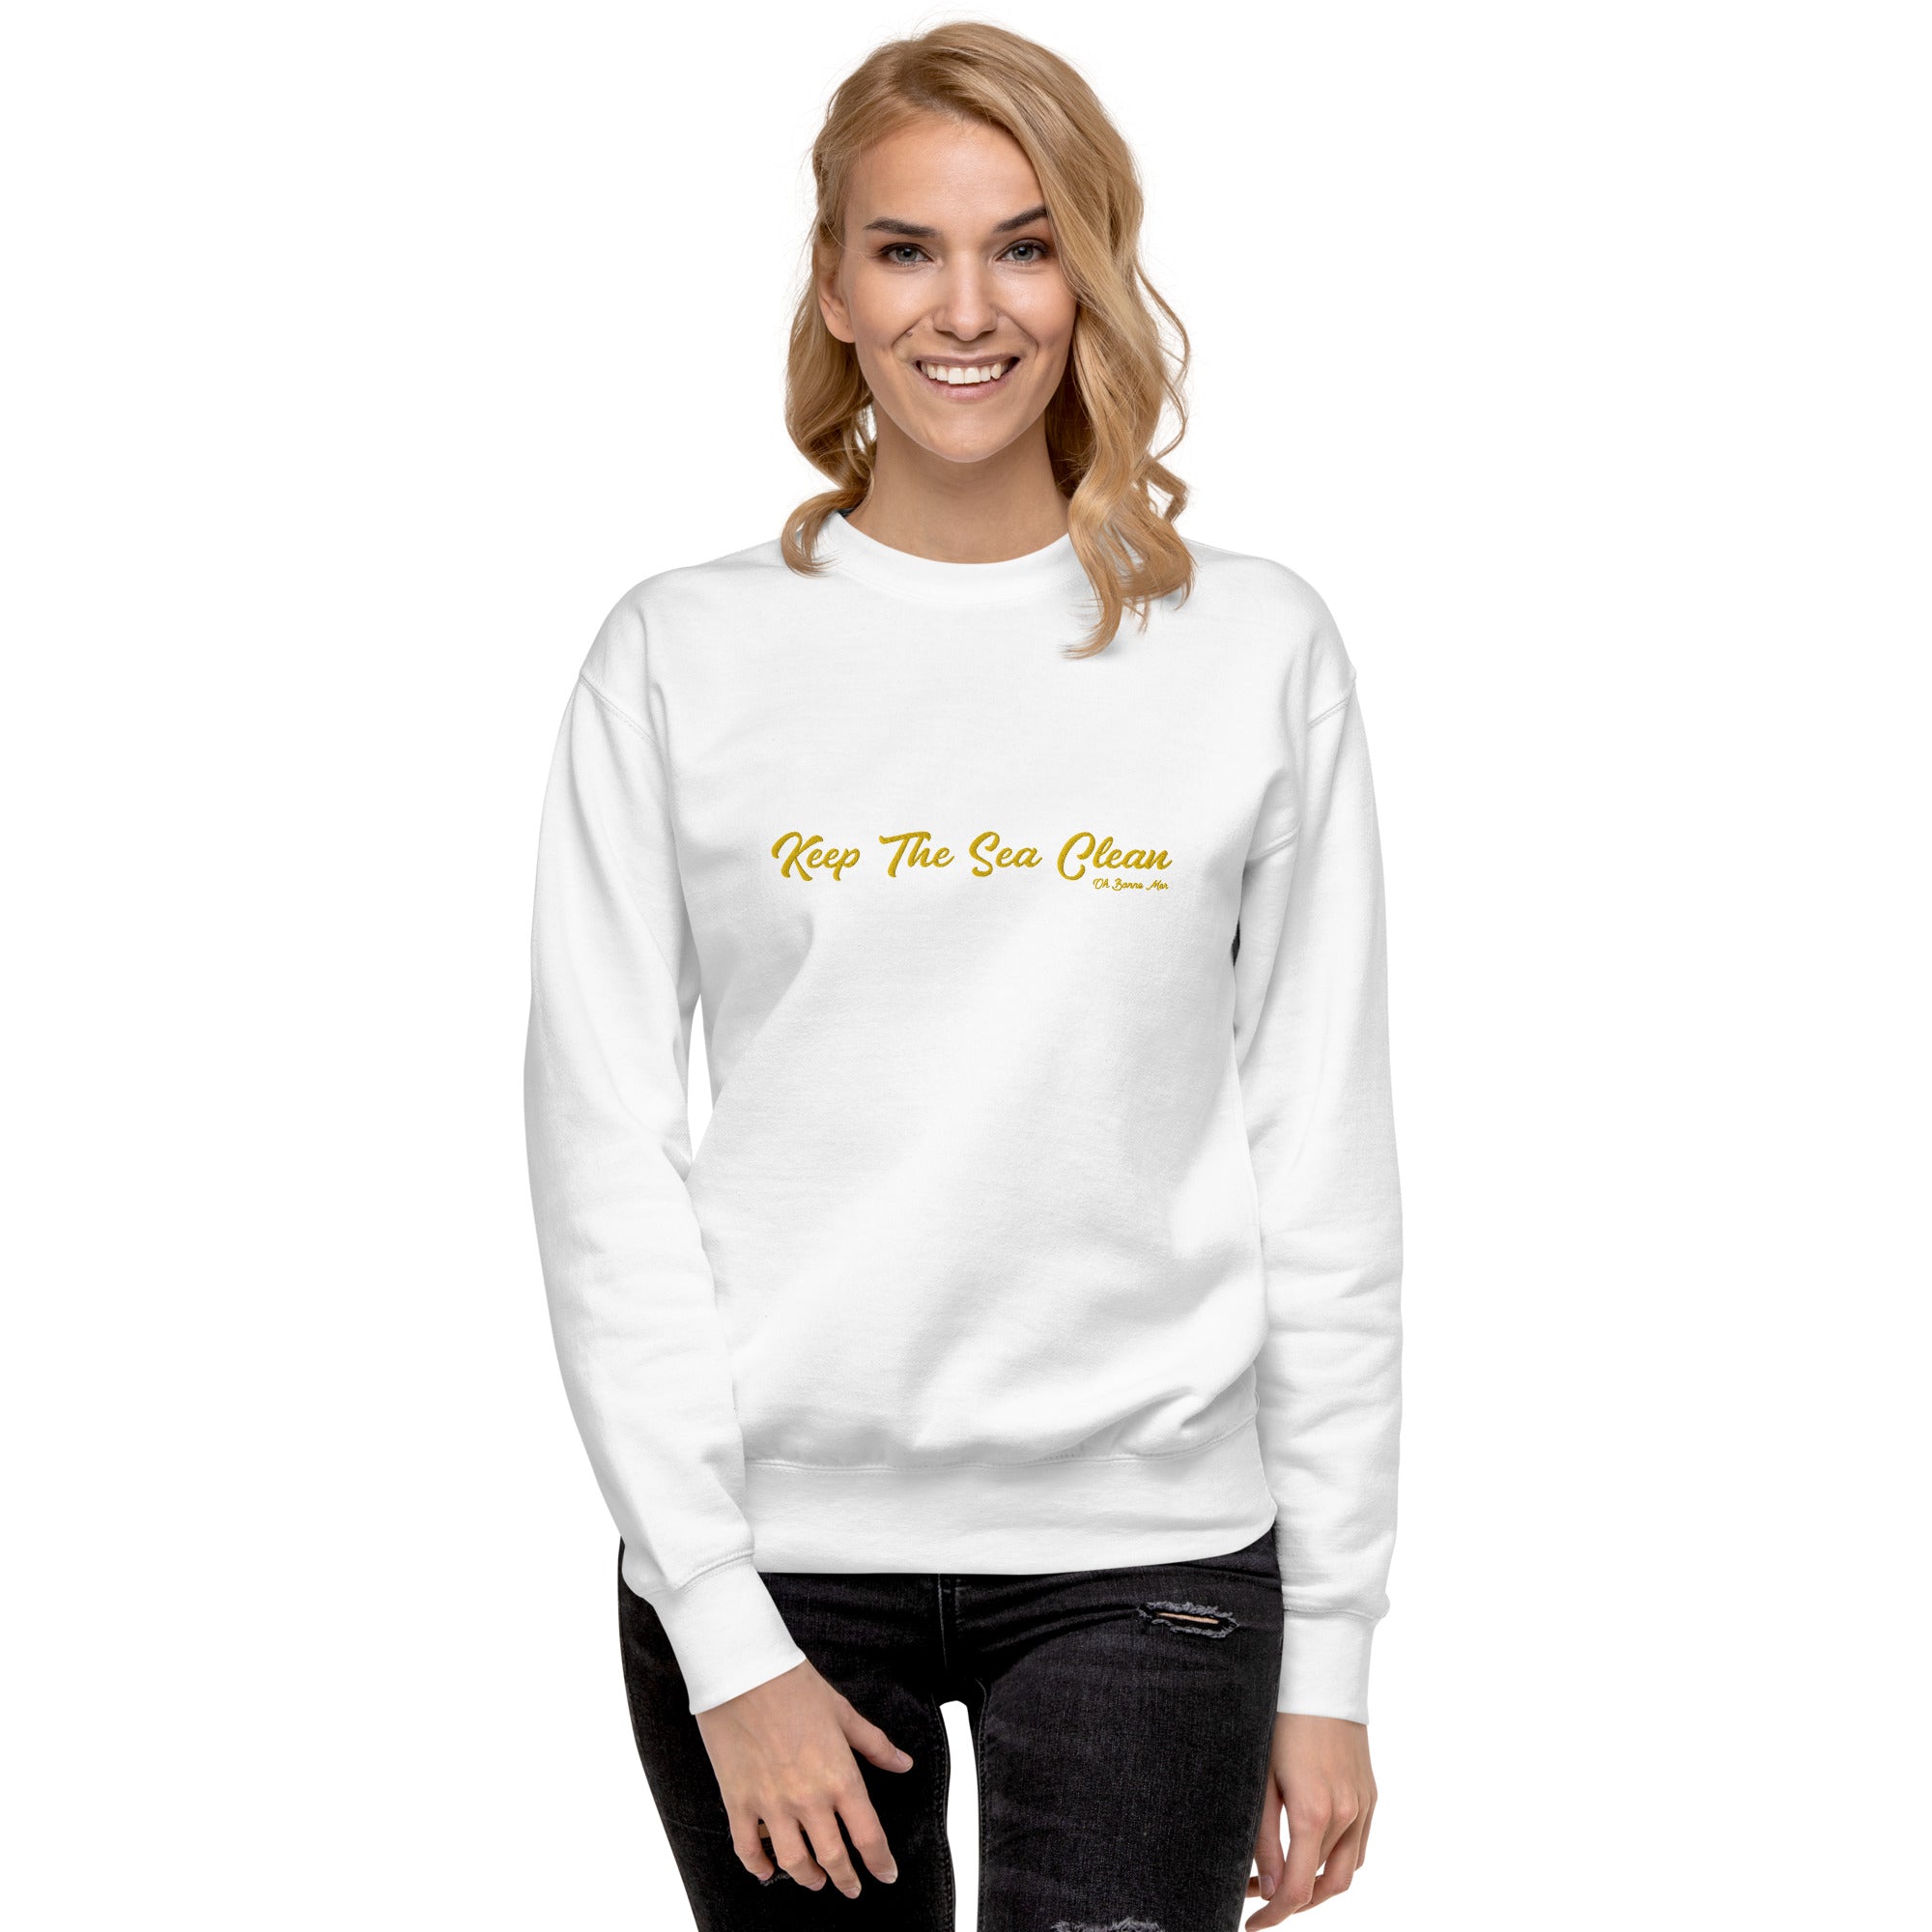 Unisex Premium Sweatshirt Keep The Sea Clean large embroidered pattern